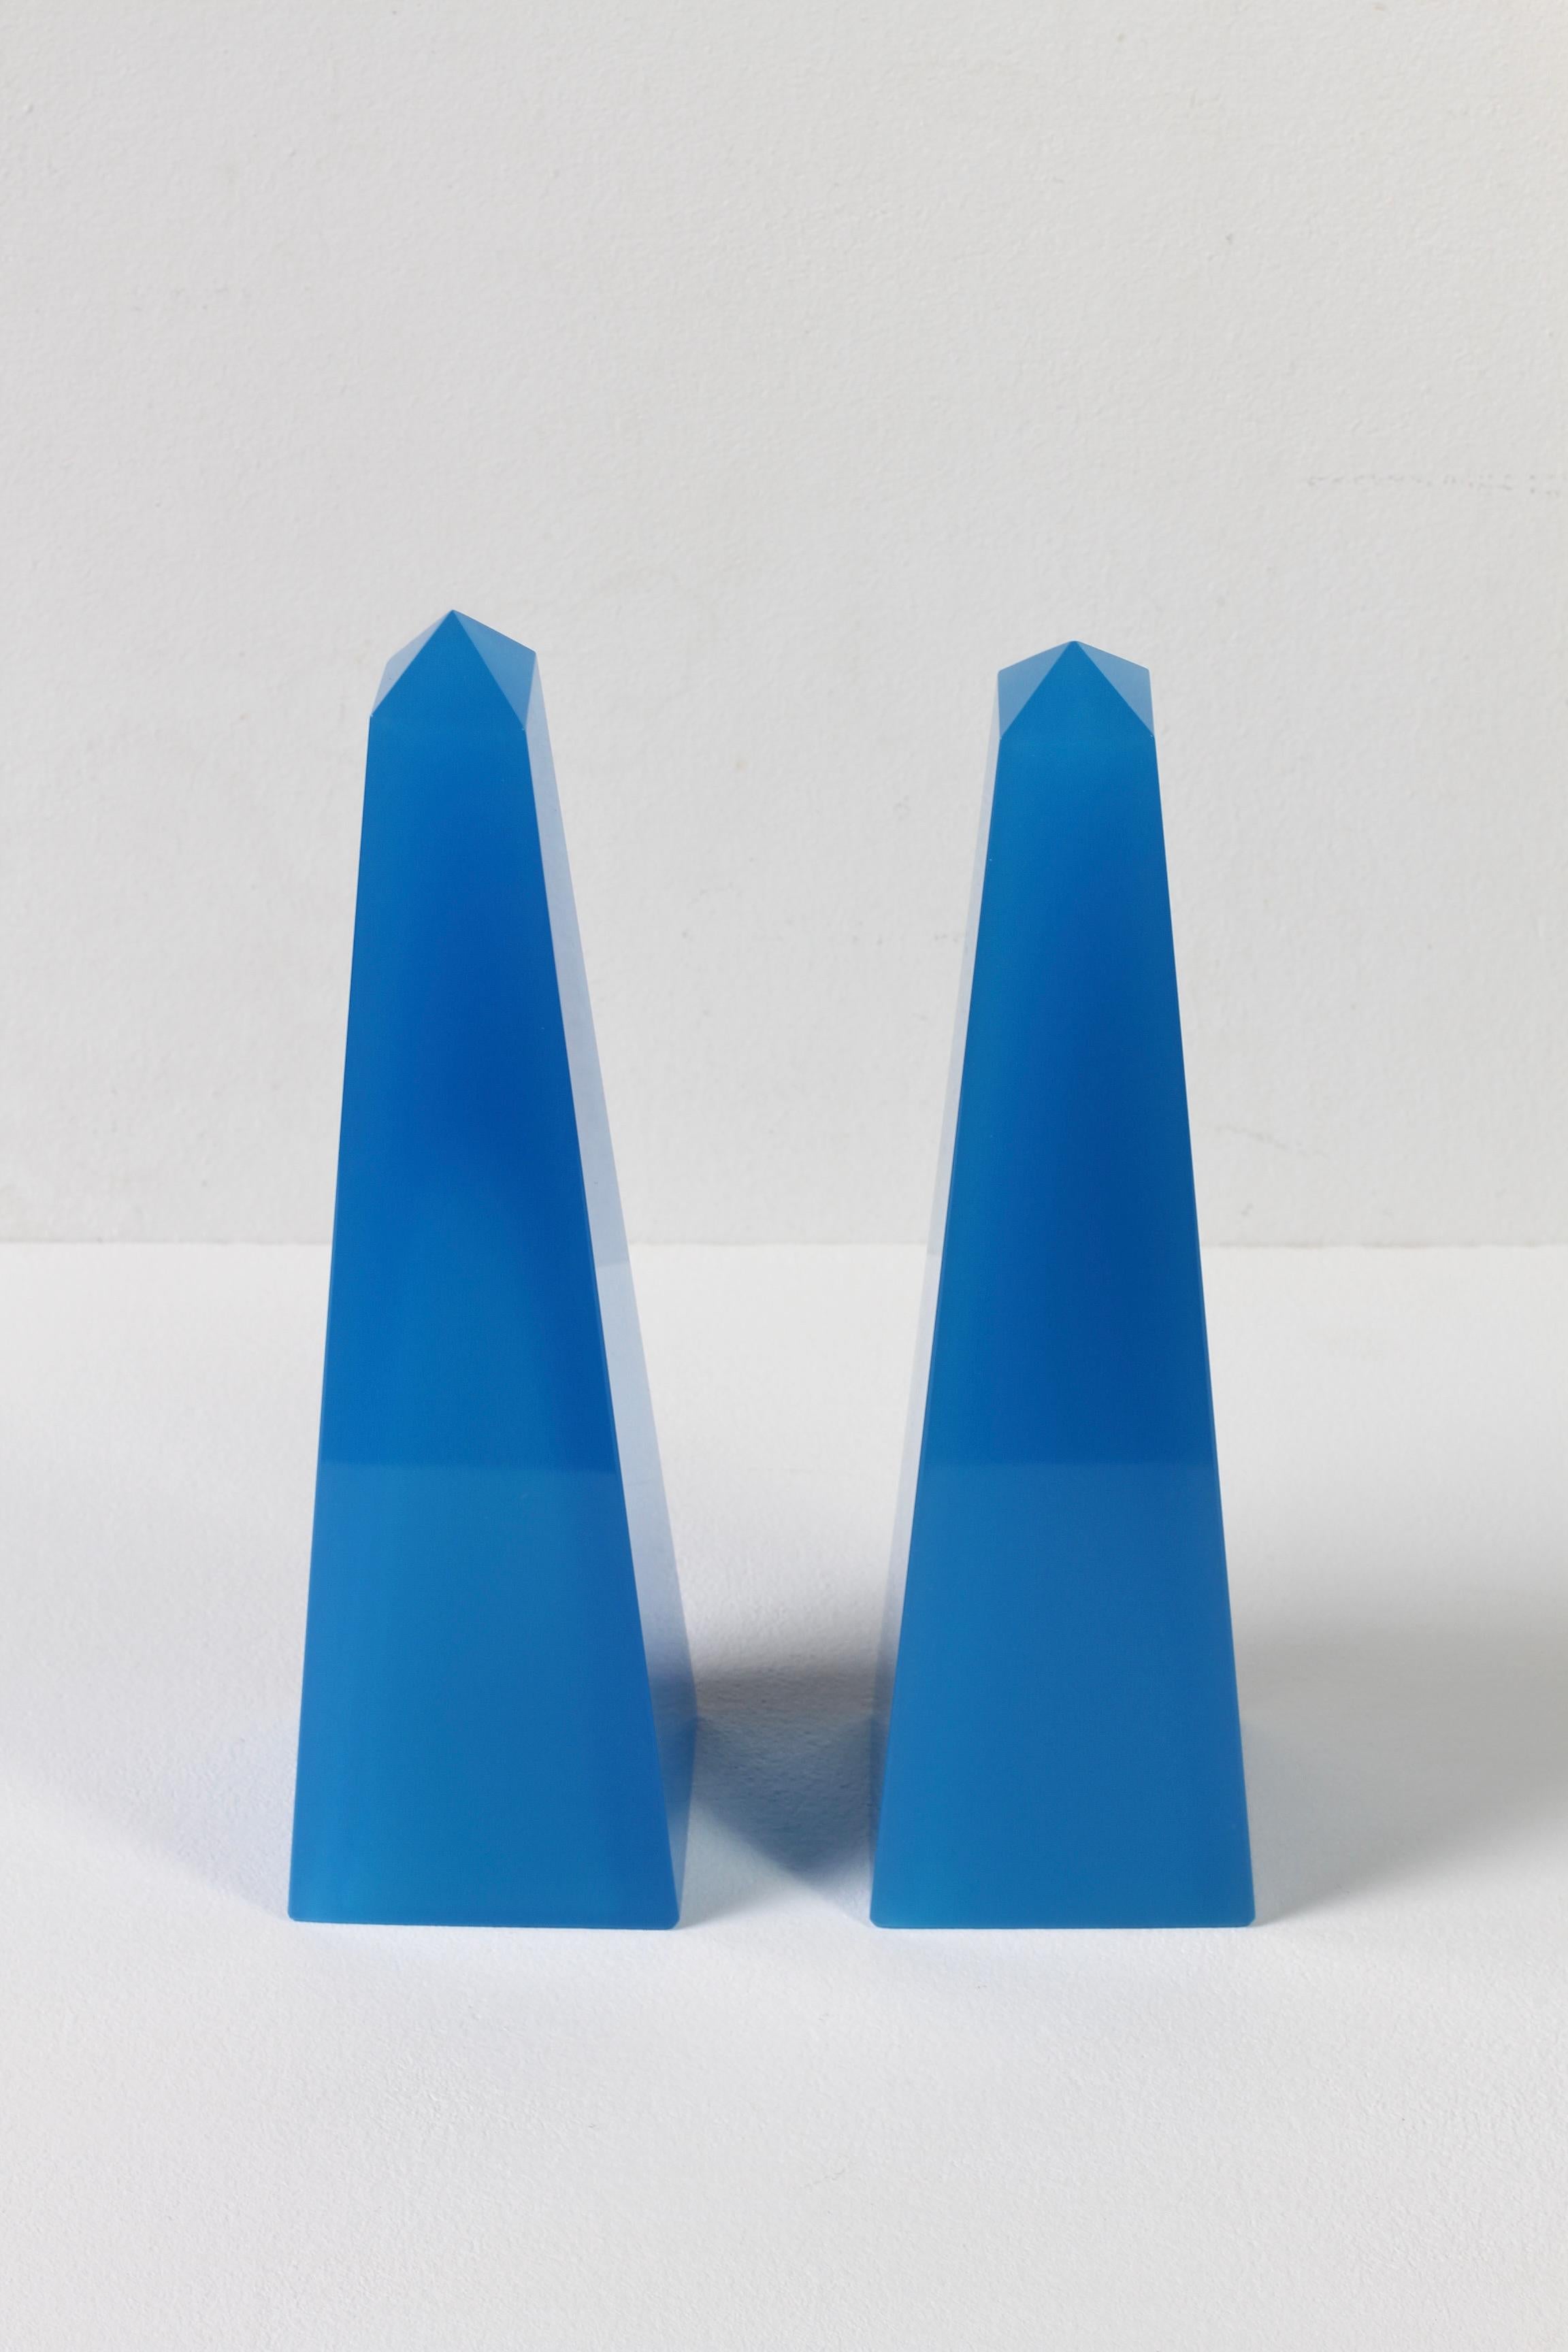 Cenedese Mid-Century Modern Vintage Pair of Blue Italian Murano Glass Obelisks For Sale 2